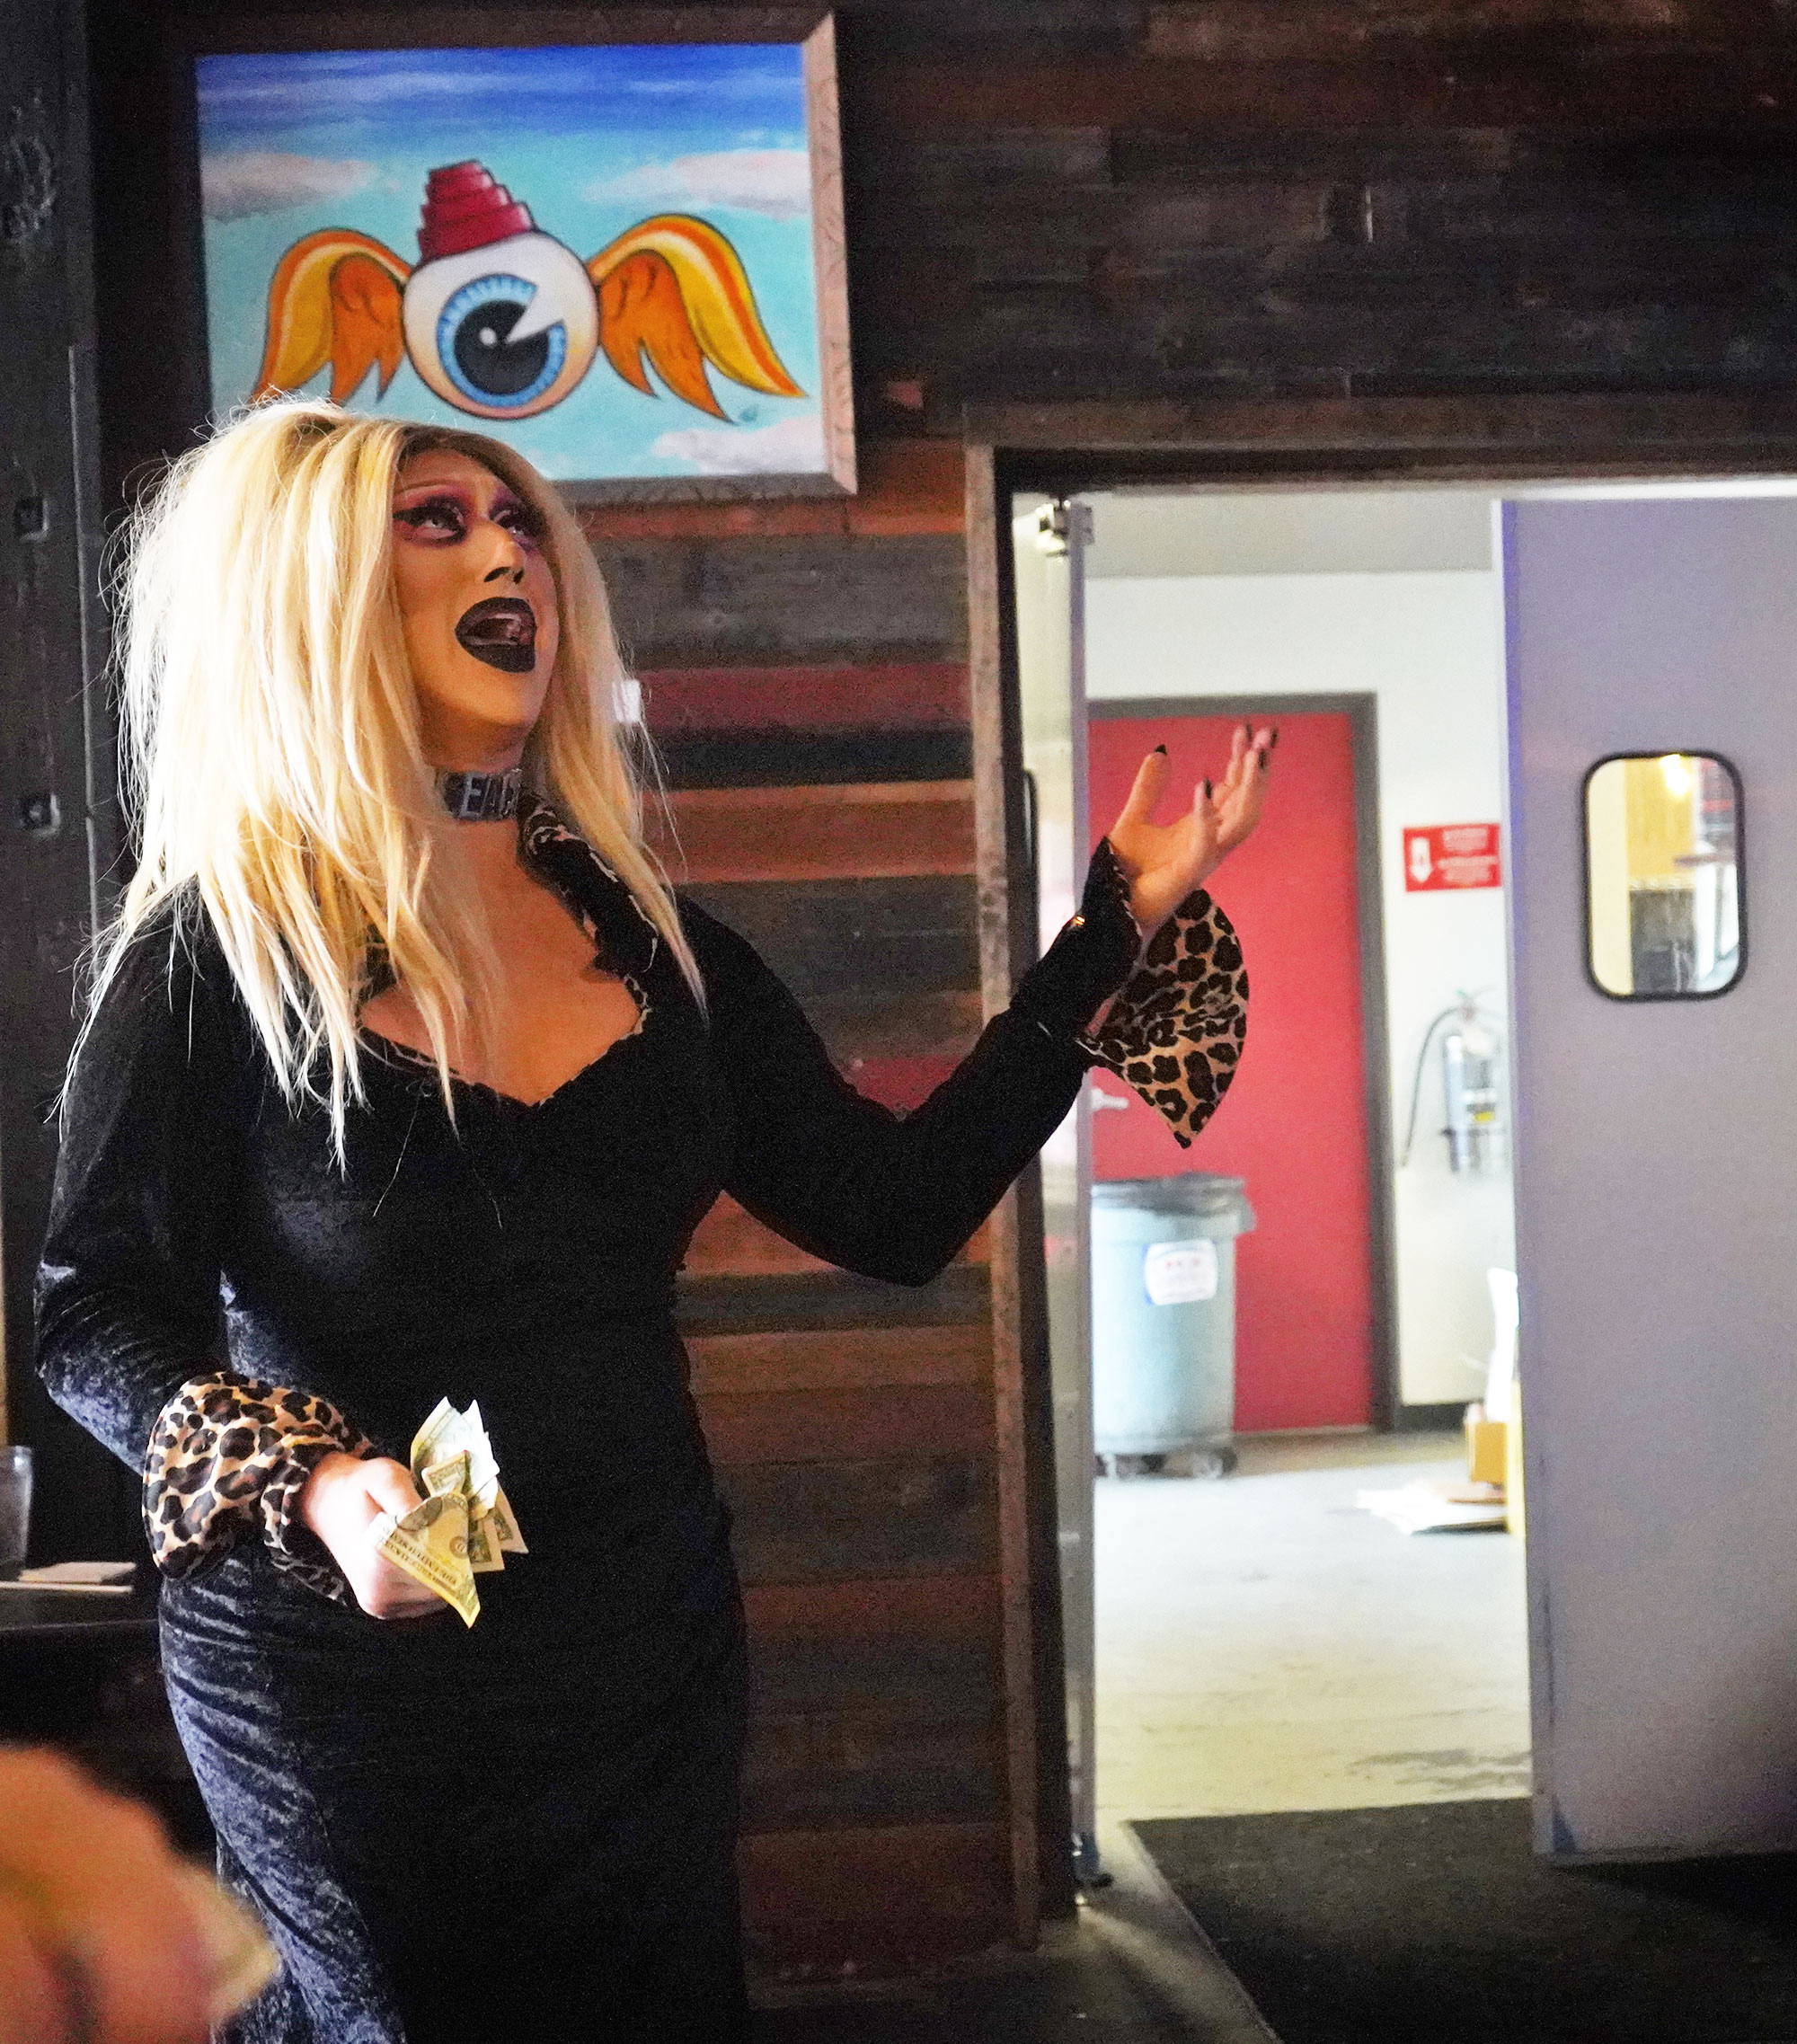 Dallas drag queen Bleach performing at drag brunch.